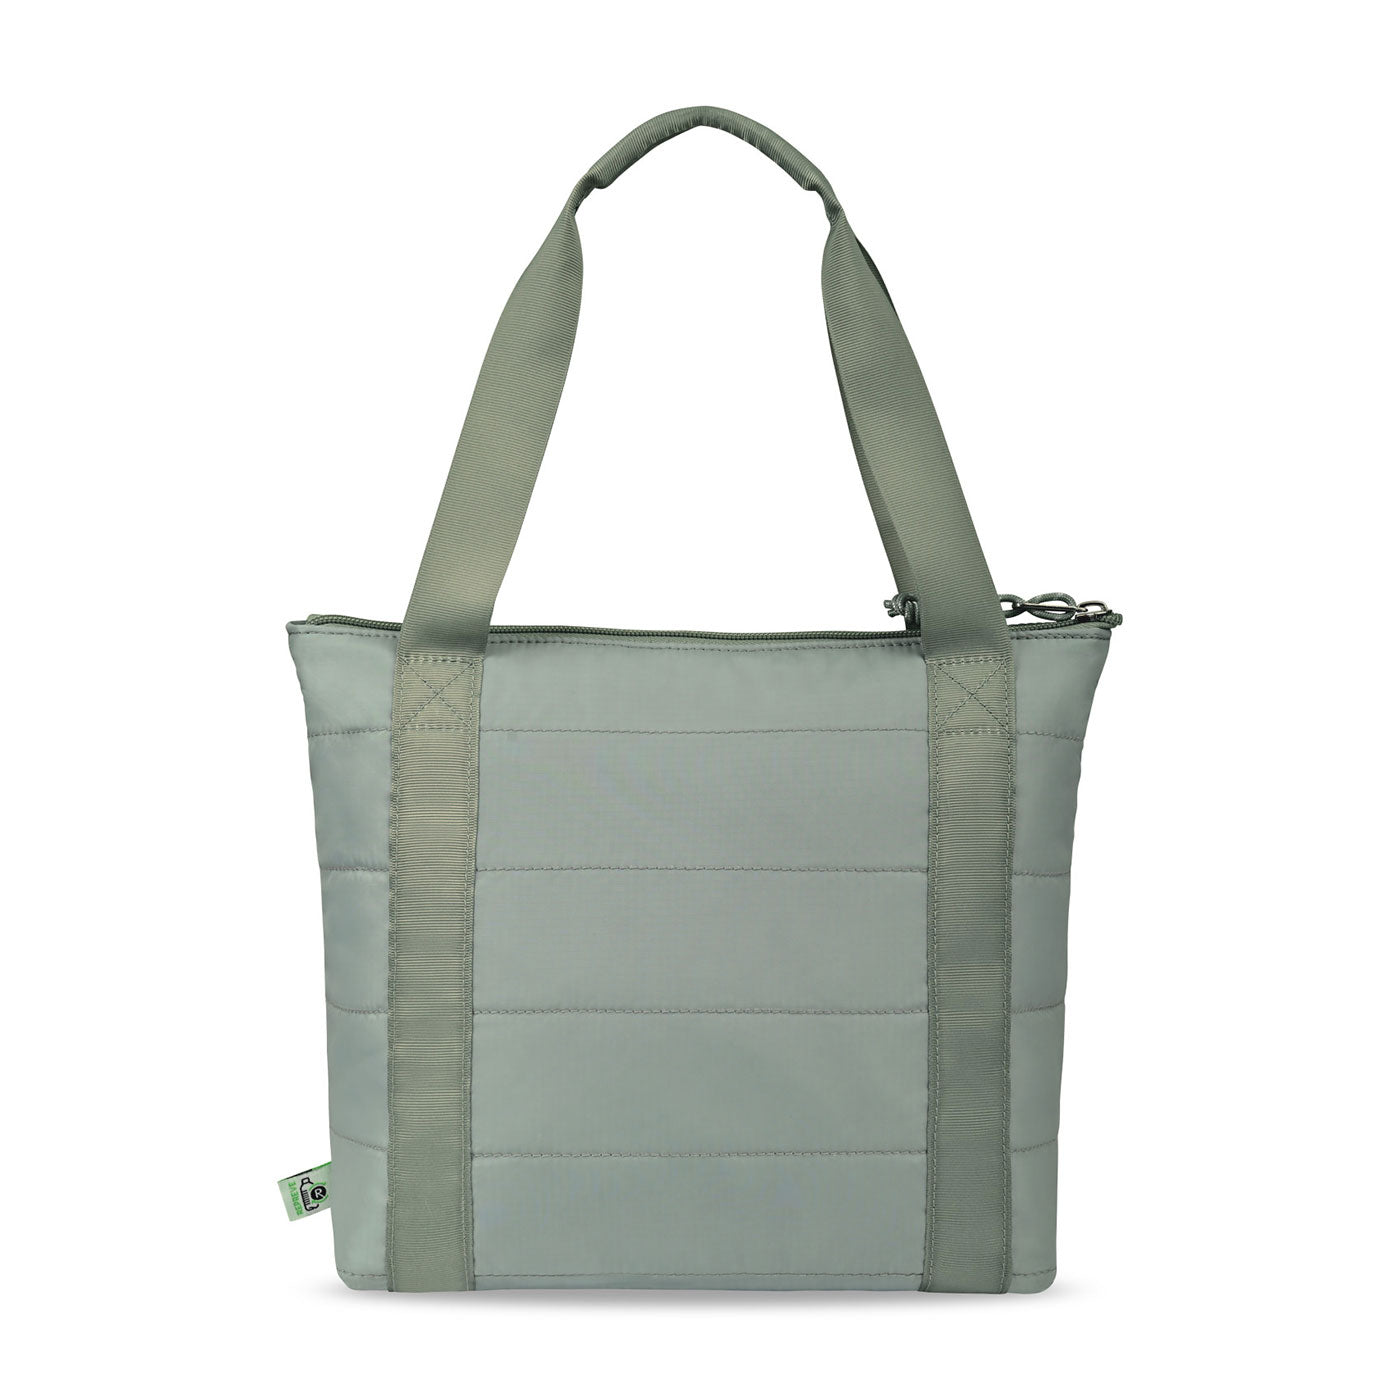 Igloo Packable Puffer 20 Can Custom Cooler Bags, Aqua Gray